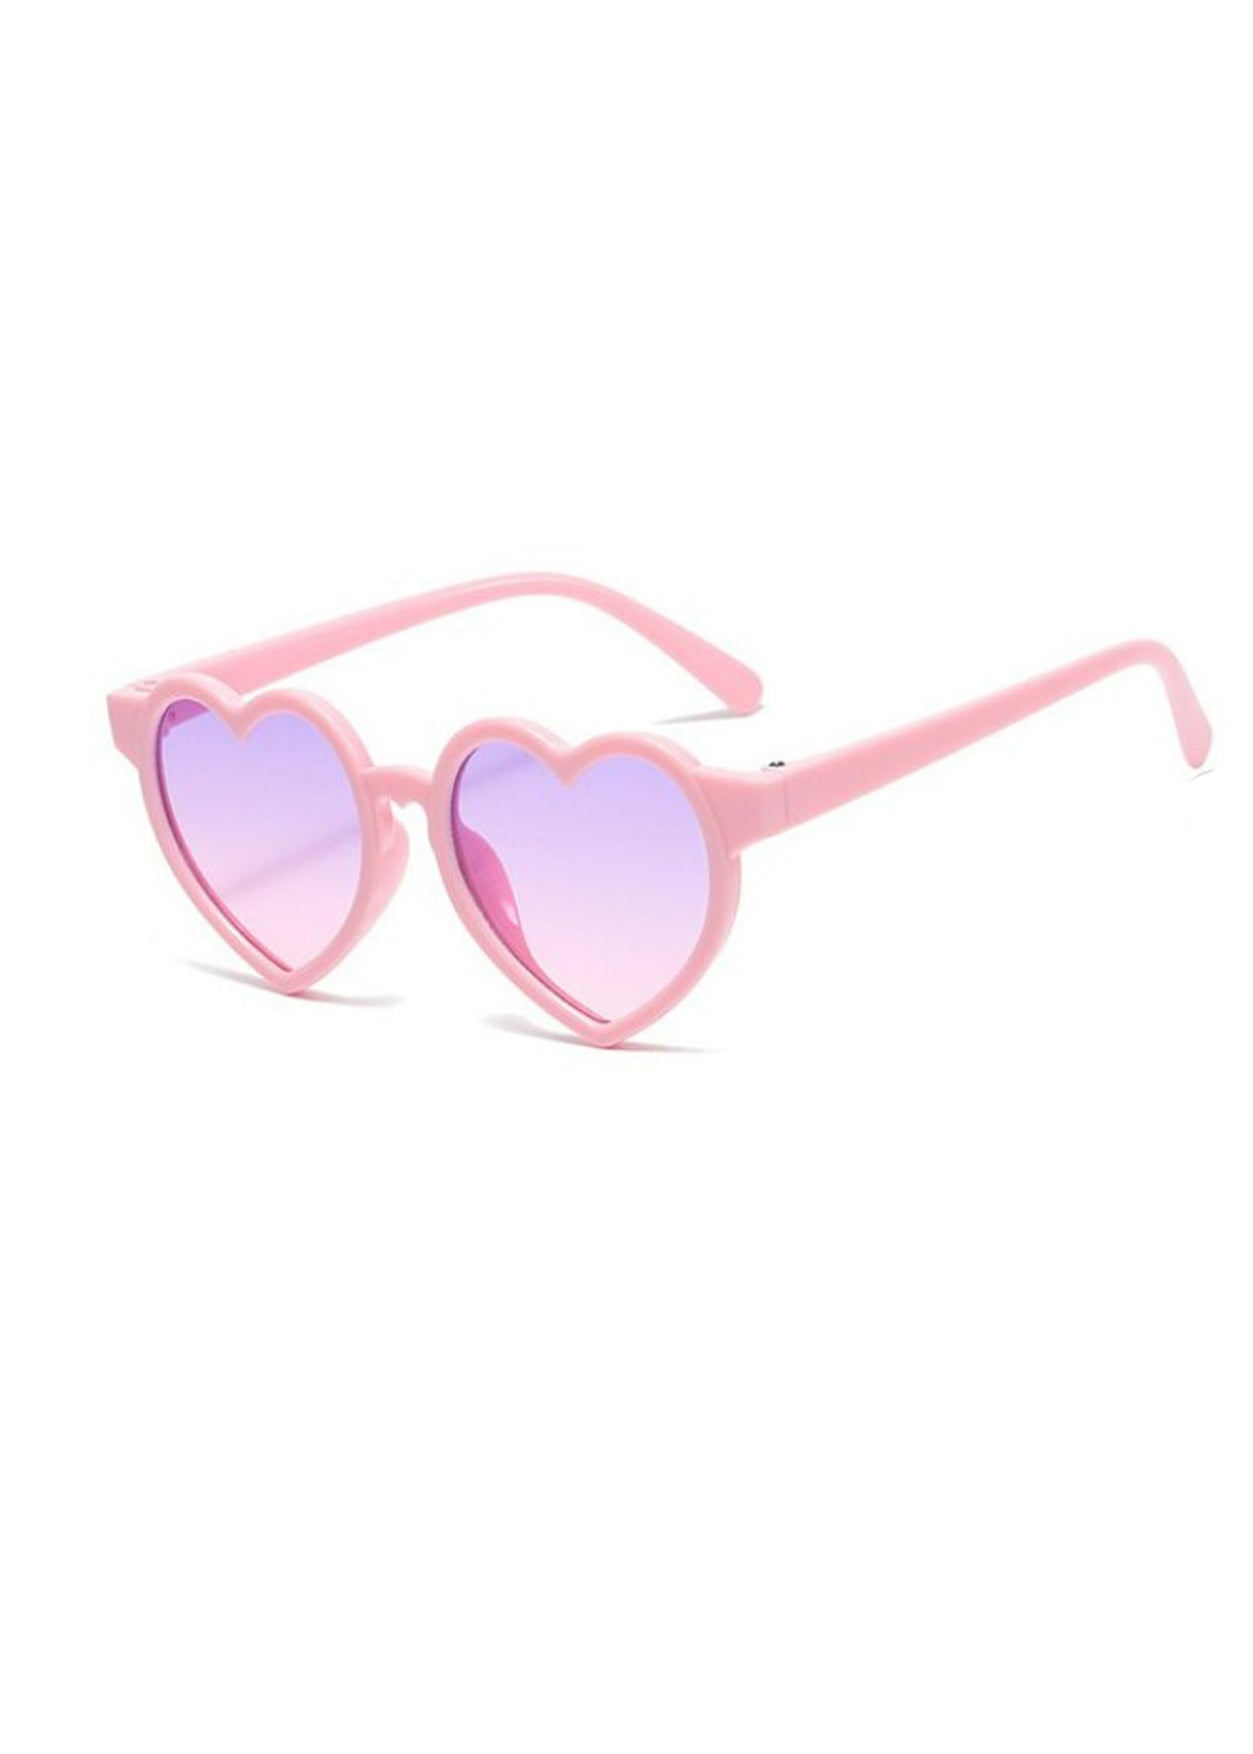 Sunglasses Pink Heart